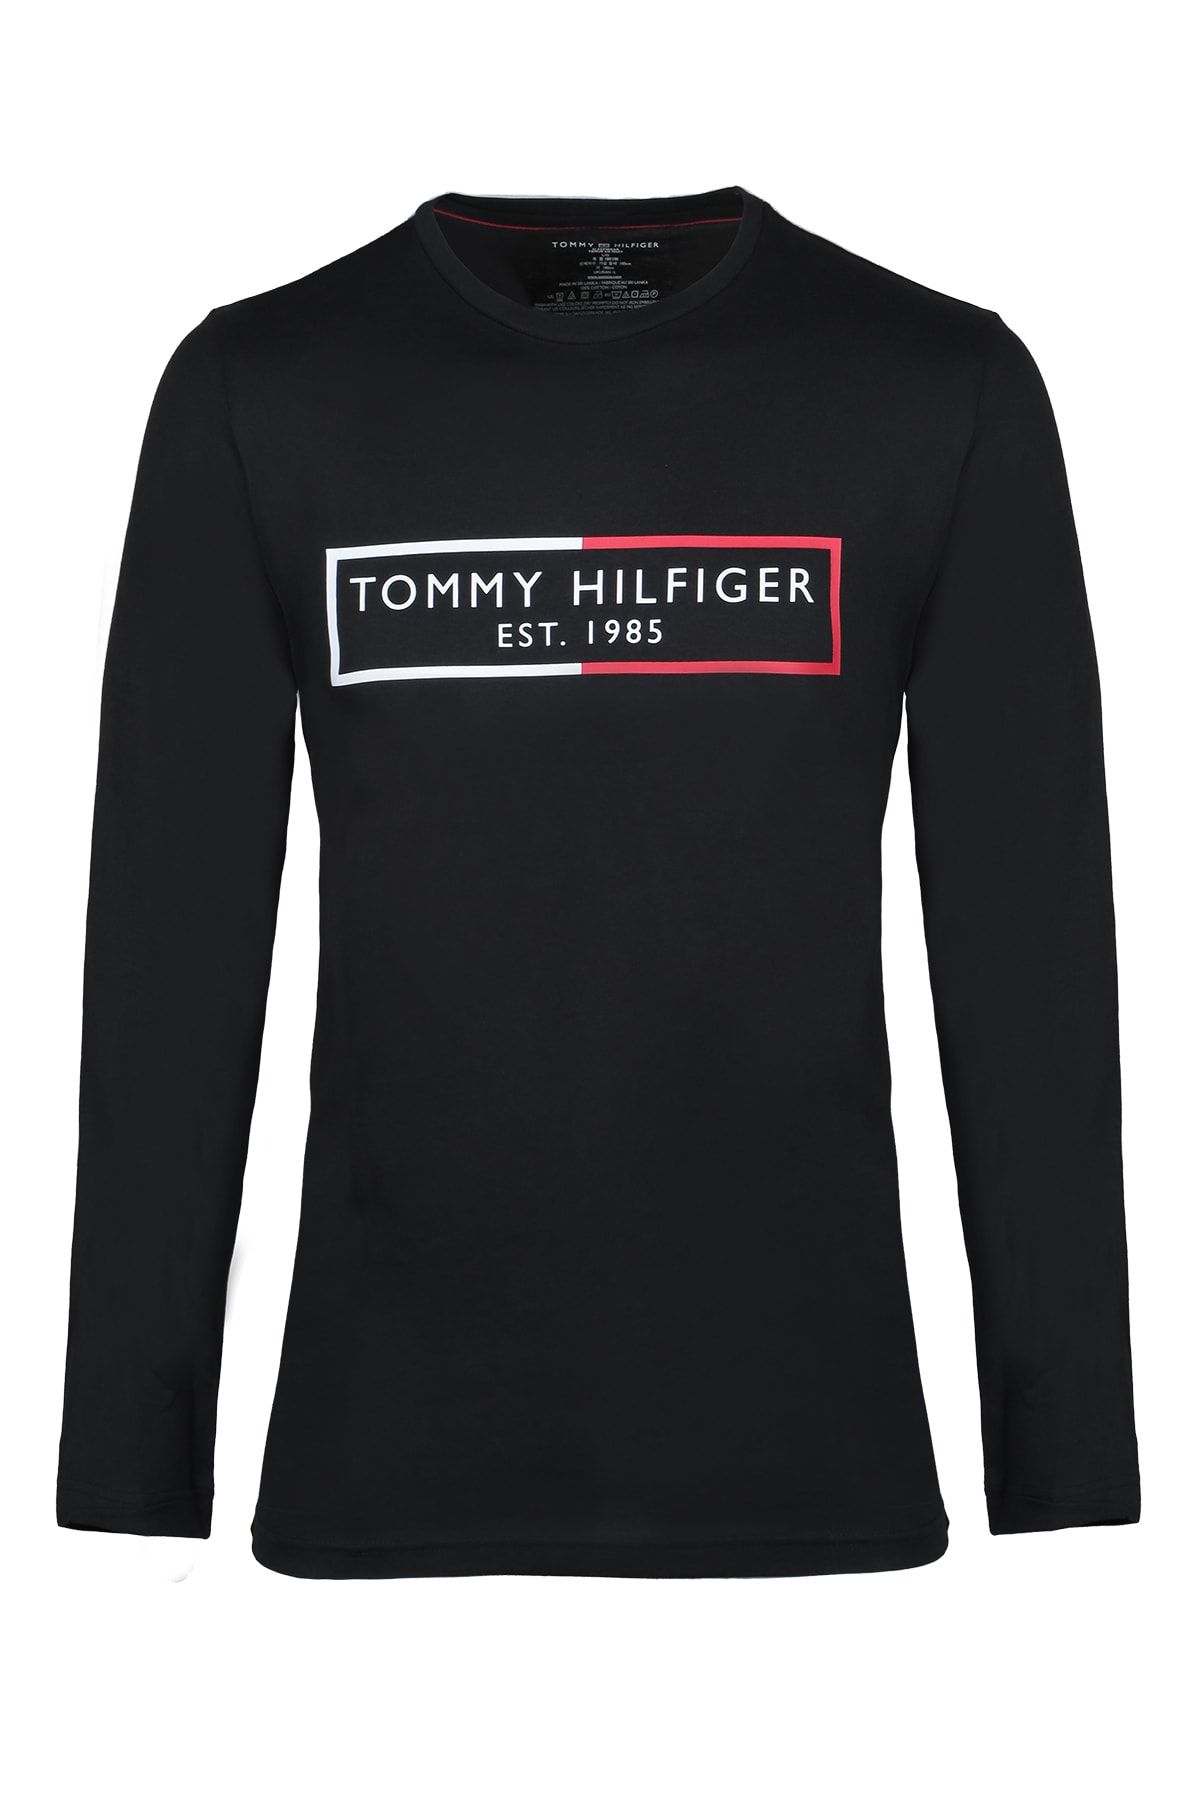 Tommy Hilfiger Uzun Kollu Sweatshirt 09t4213-001